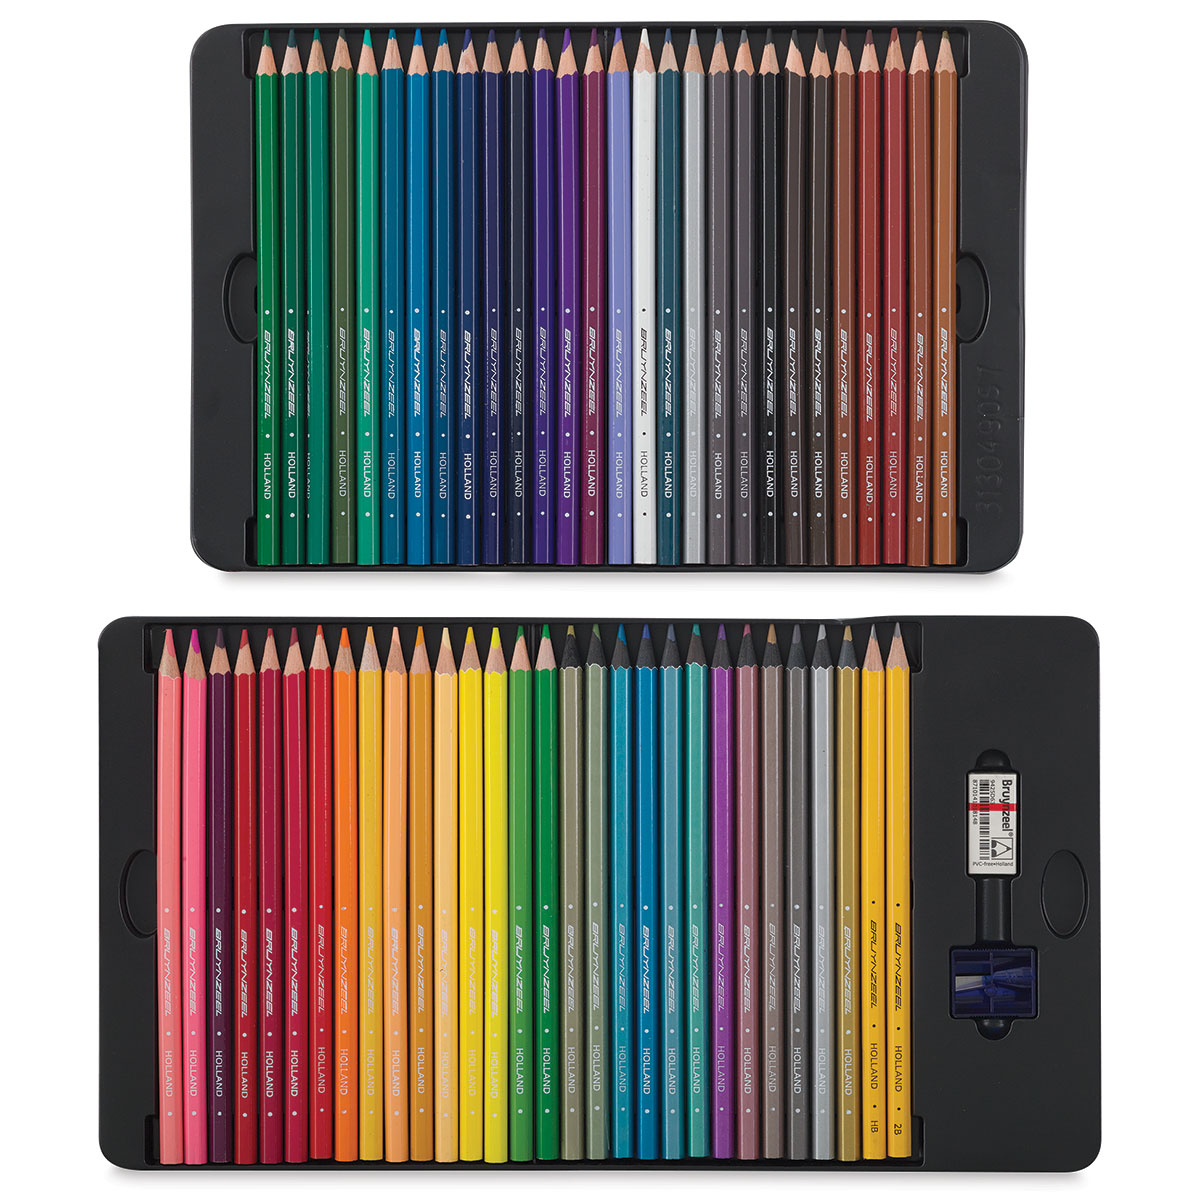 Review Bruynzeel Super Sixties coloured pencils